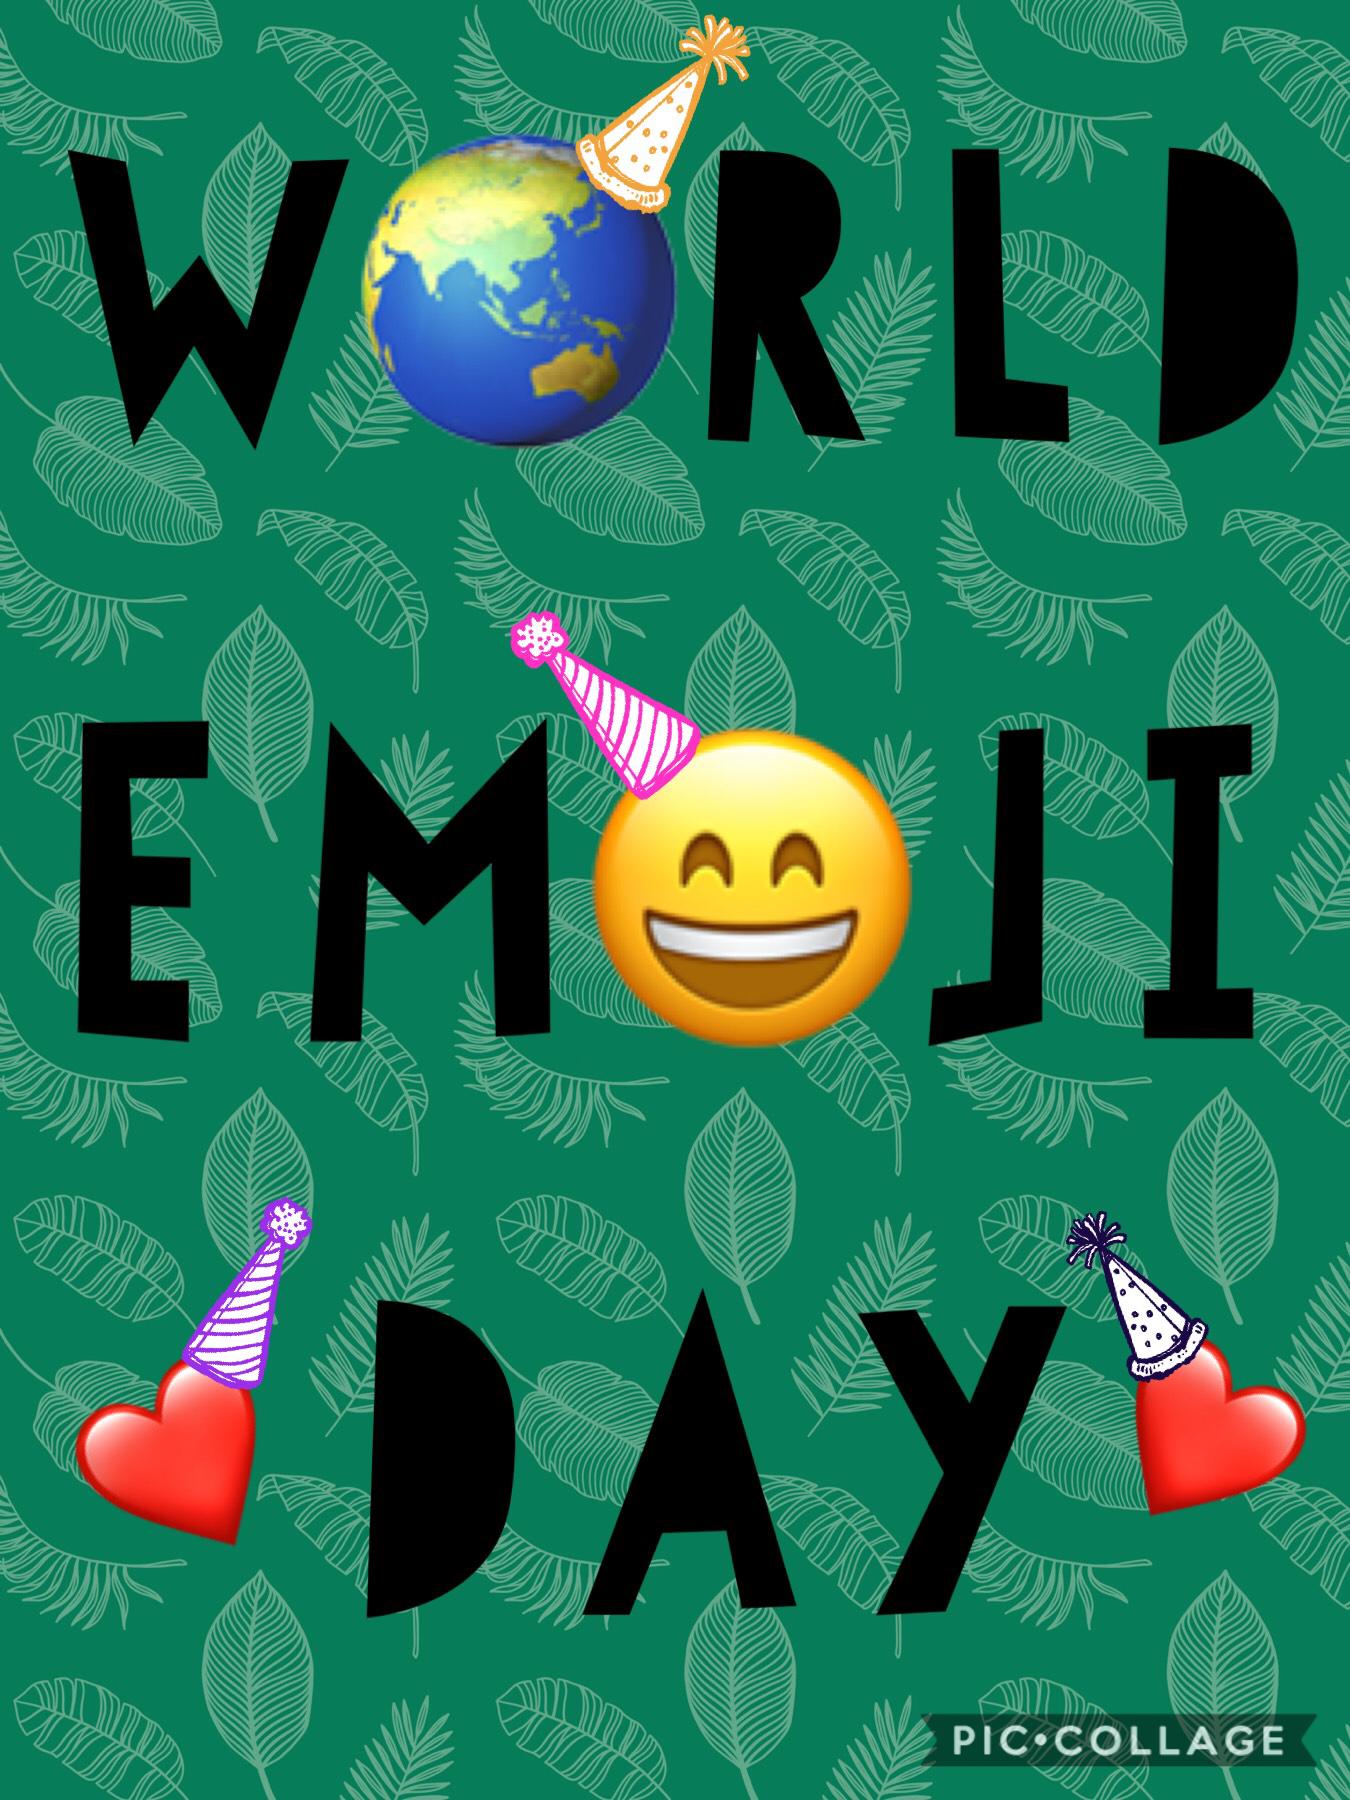 ❤️ Tap ❤️
Happy 😄 World 🌏 Emoji 😆 Day! 💗 OR 😄🌏😆💗! 